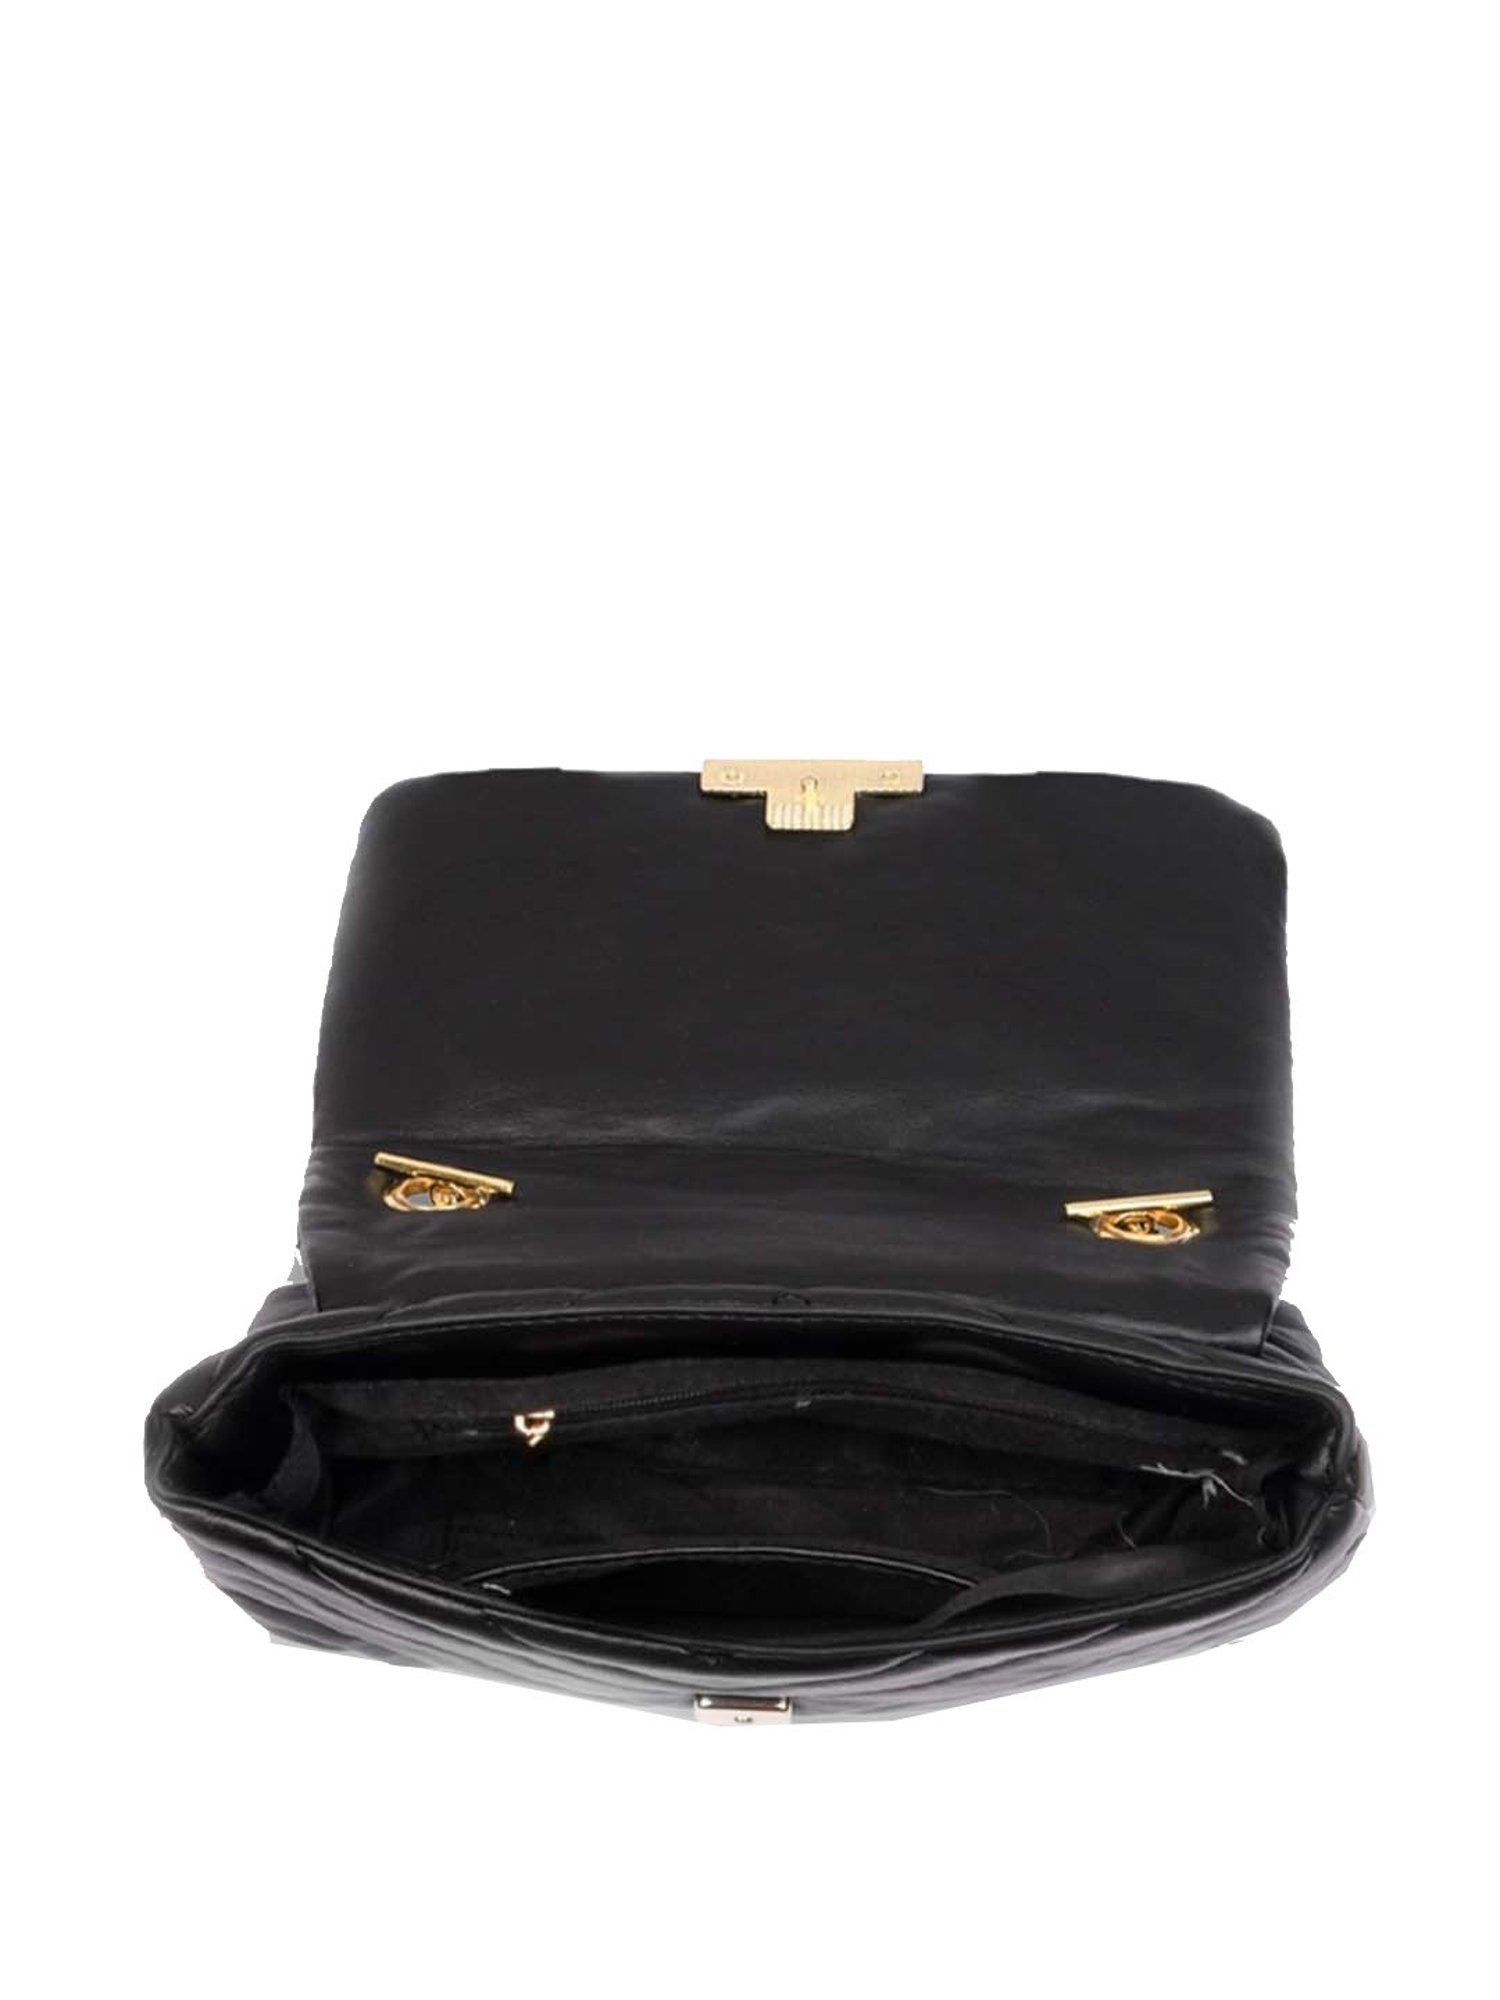 Accessorize London Women's Faux Leather Black Eva Quilt Shoulder Sling bag (Onesize) by Myntra